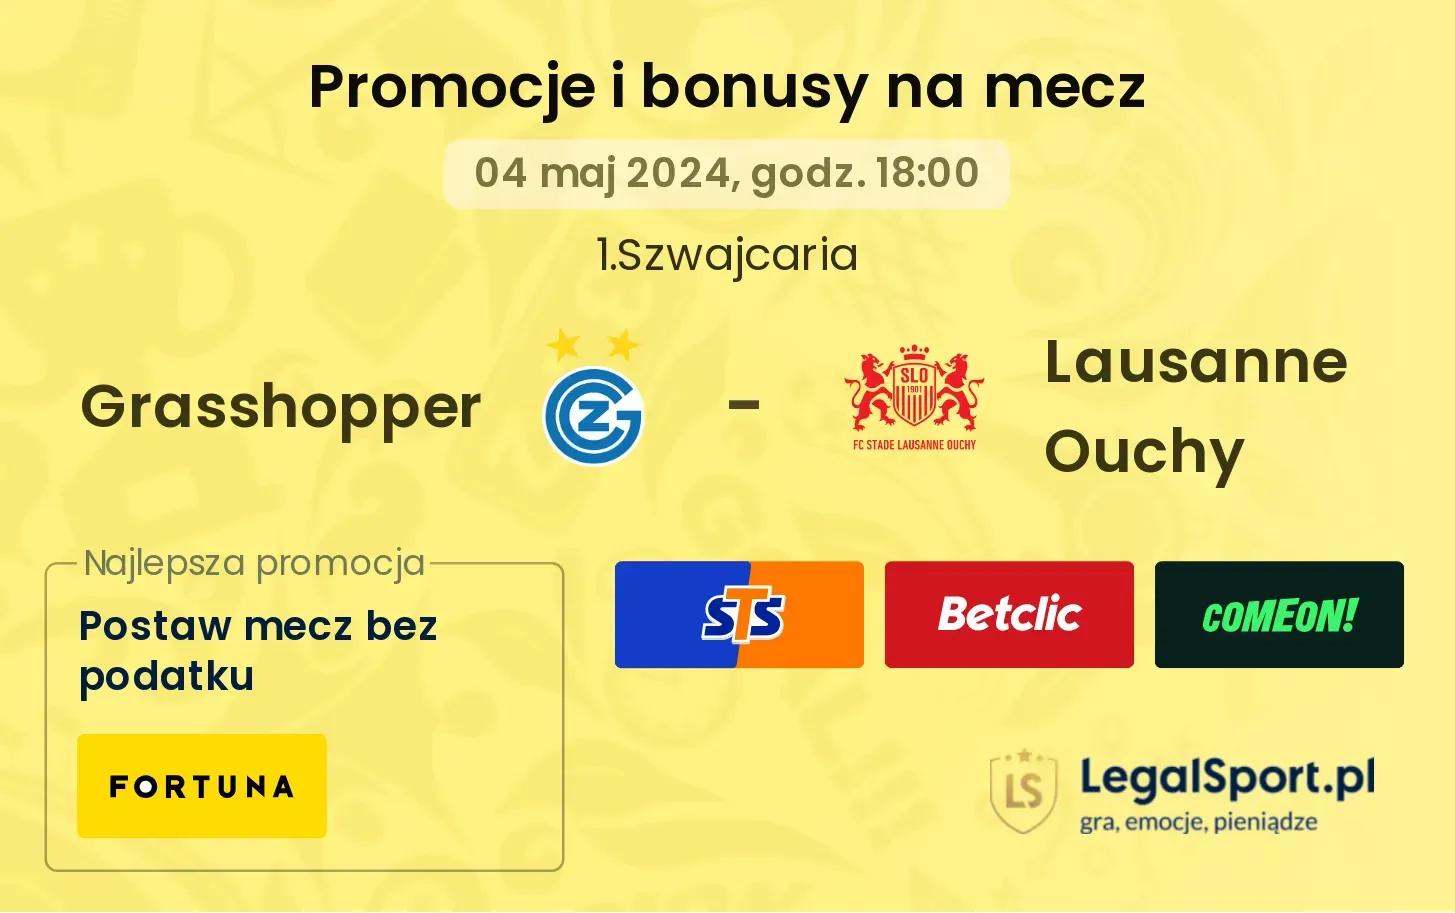 Grasshopper - Lausanne Ouchy promocje bonusy na mecz